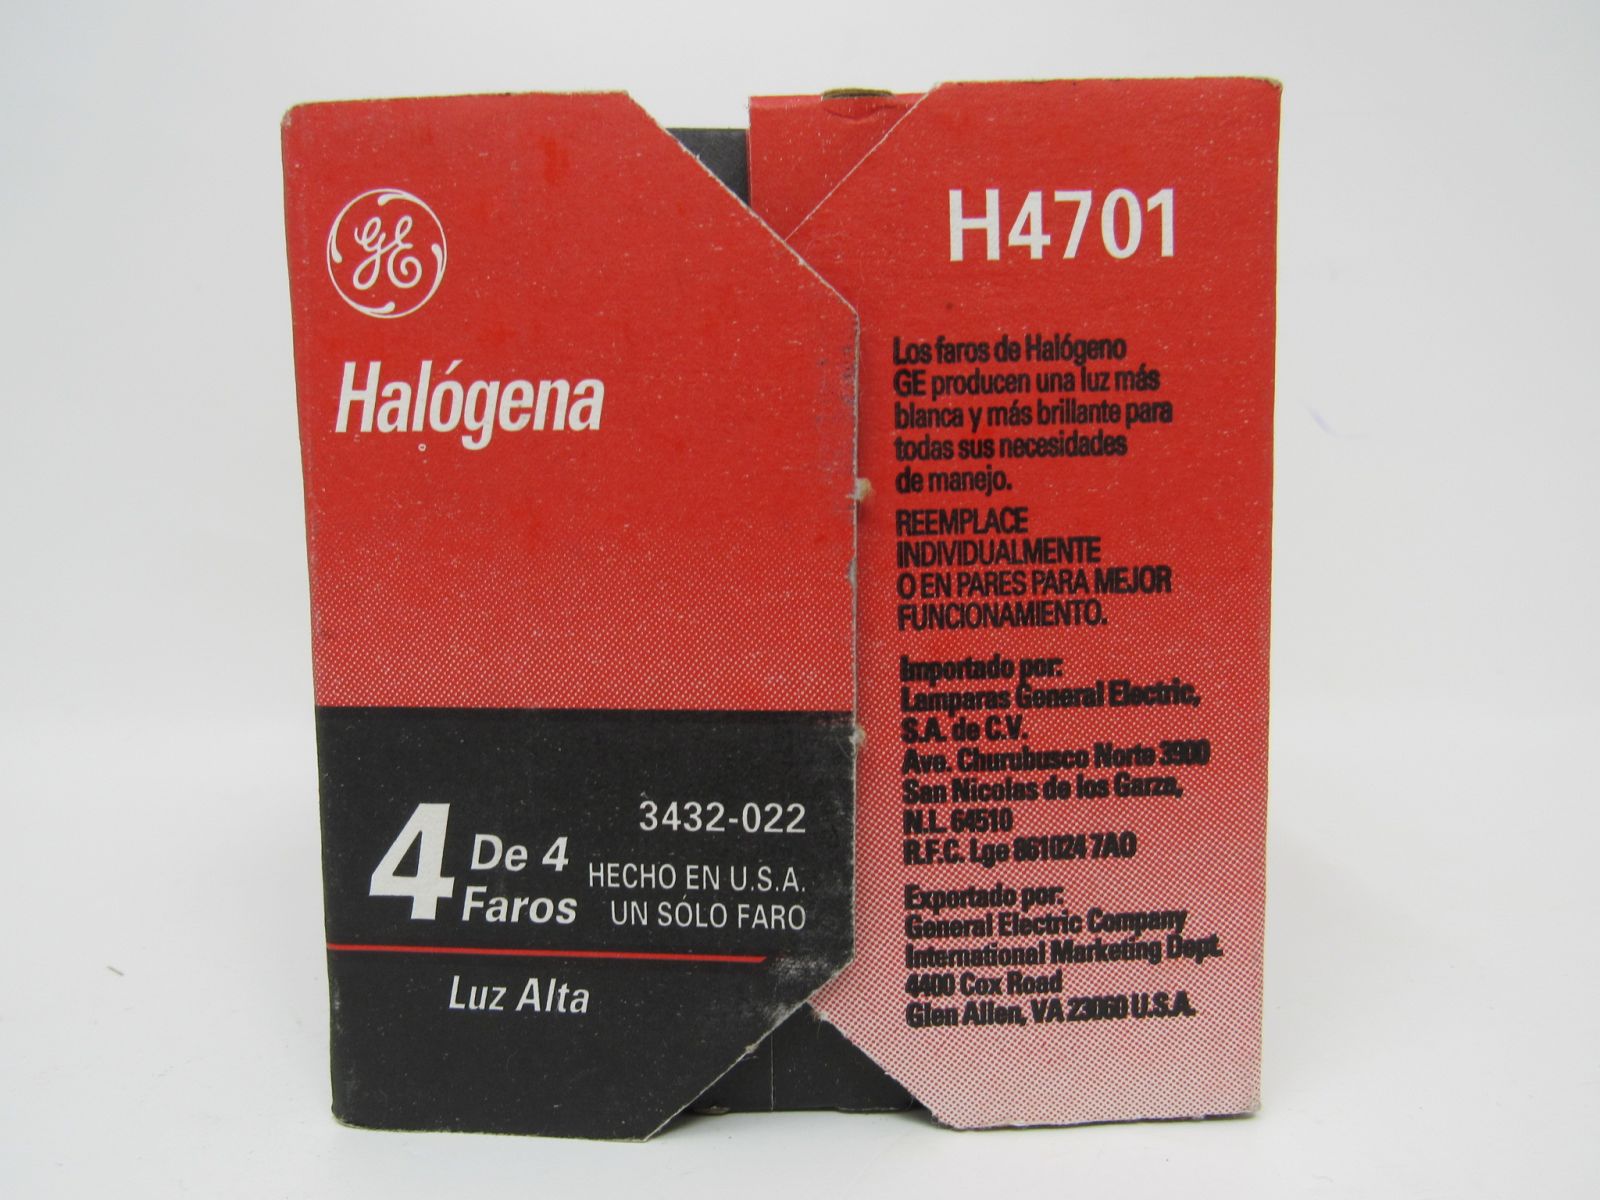 GE Lighting Halogen 4 Headlight System High Beam 65W 12V H4701 -- New